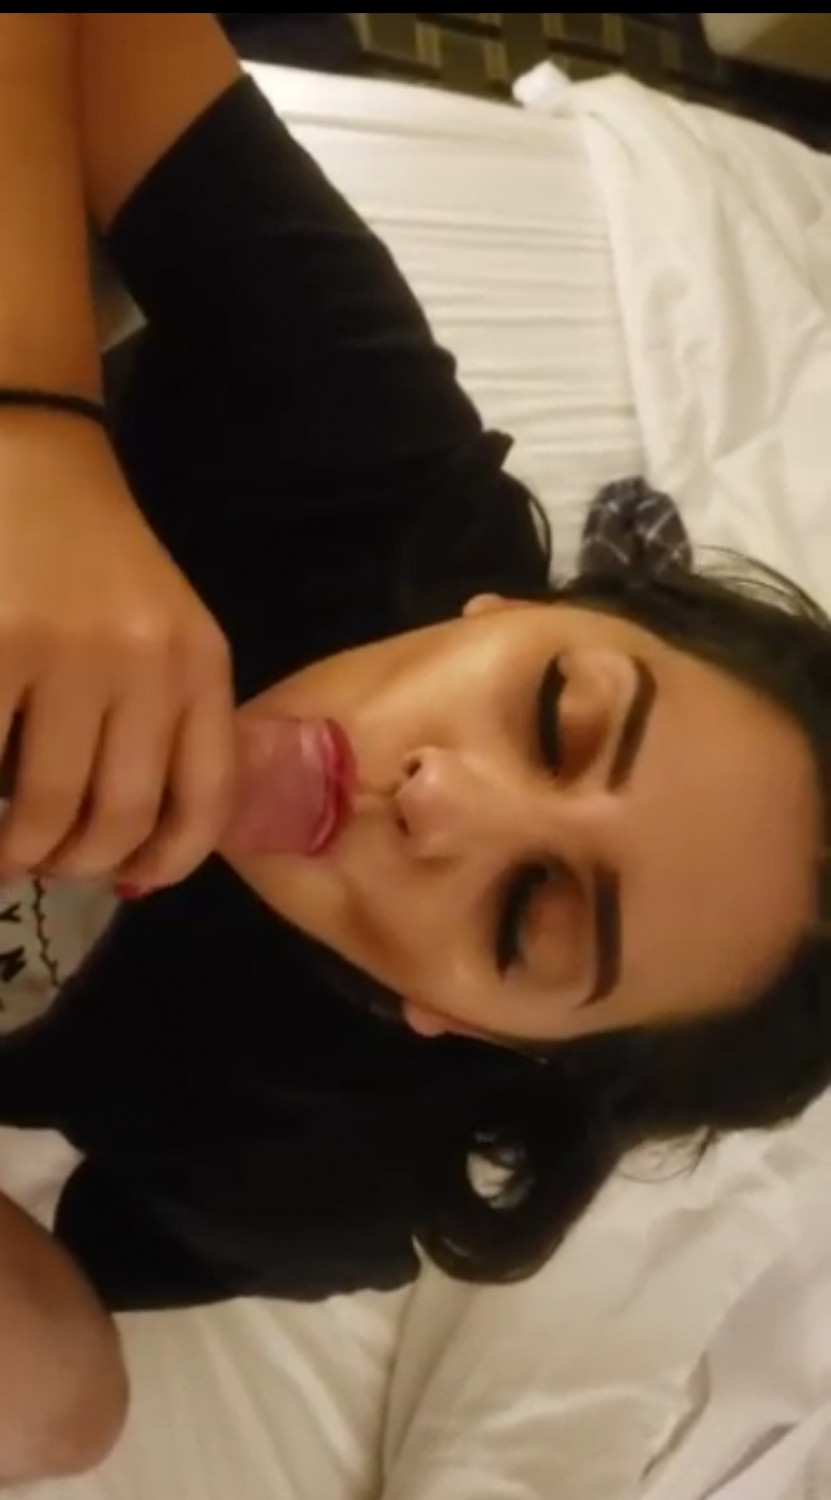 hot girlfriend sucking cock dailymotion